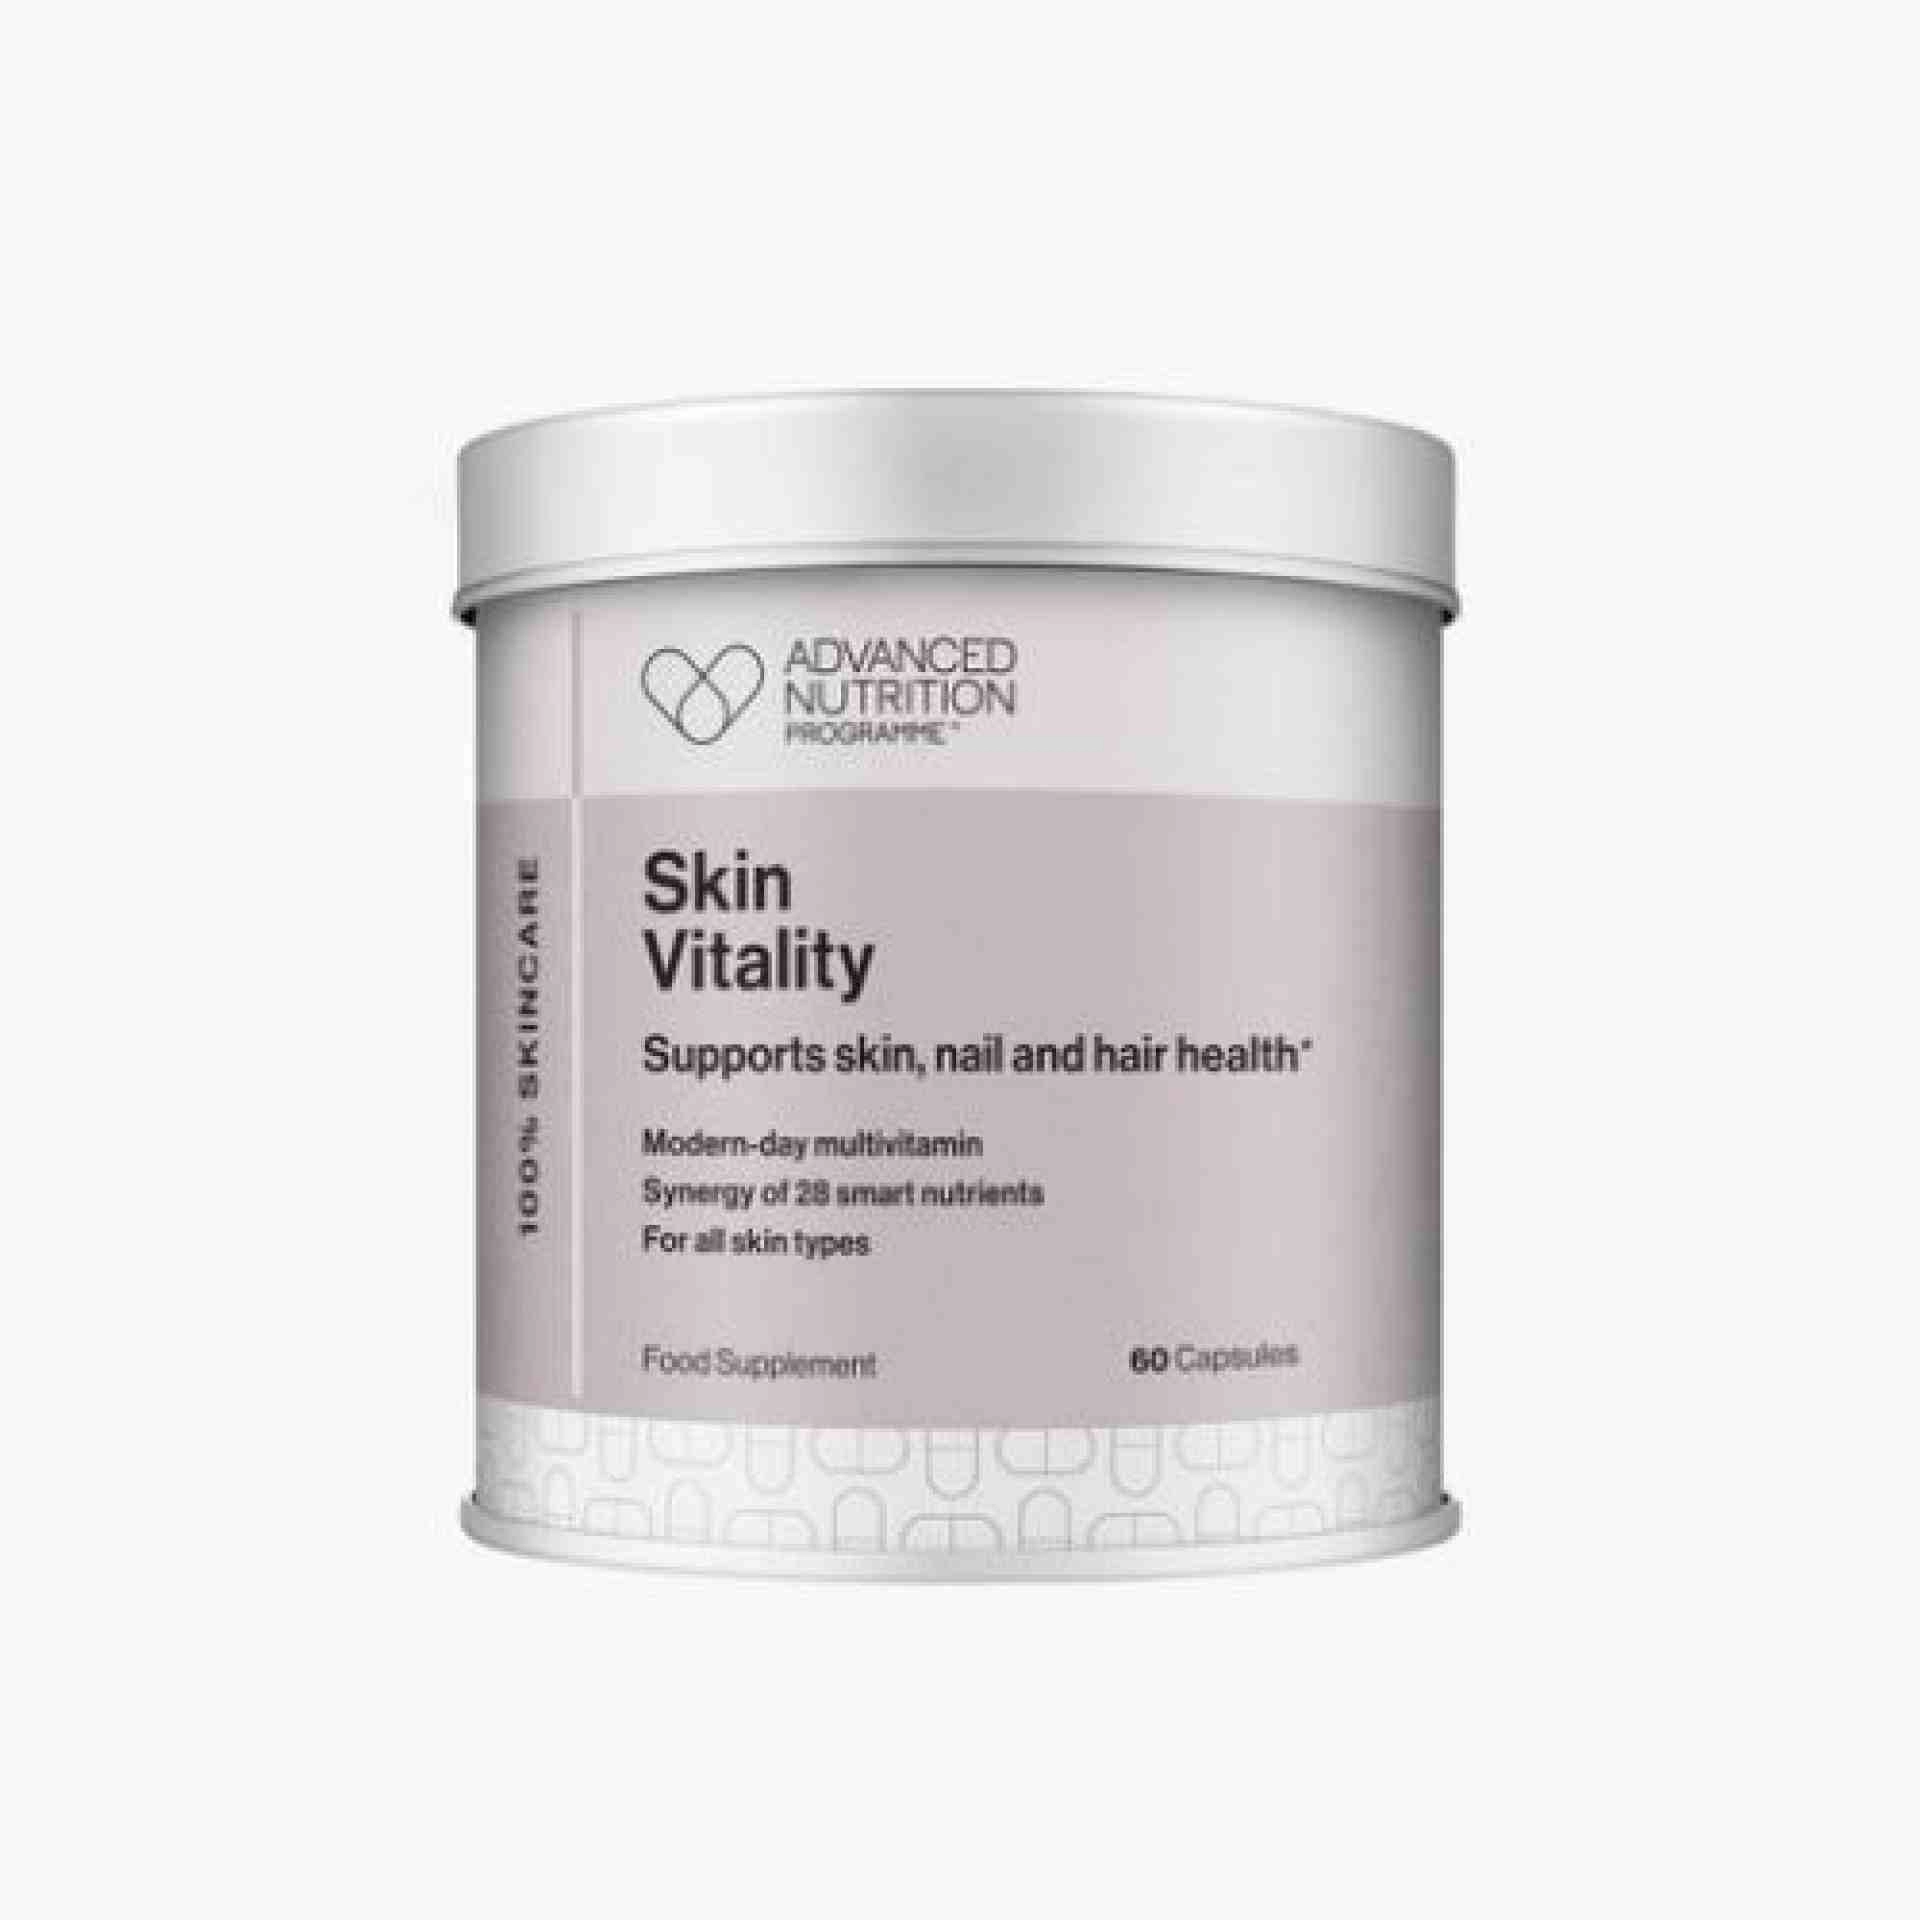 Skin Vitality - Nutricosmética 60 caps. - Soluciones específicas - Advanced Nutrition Programme ®